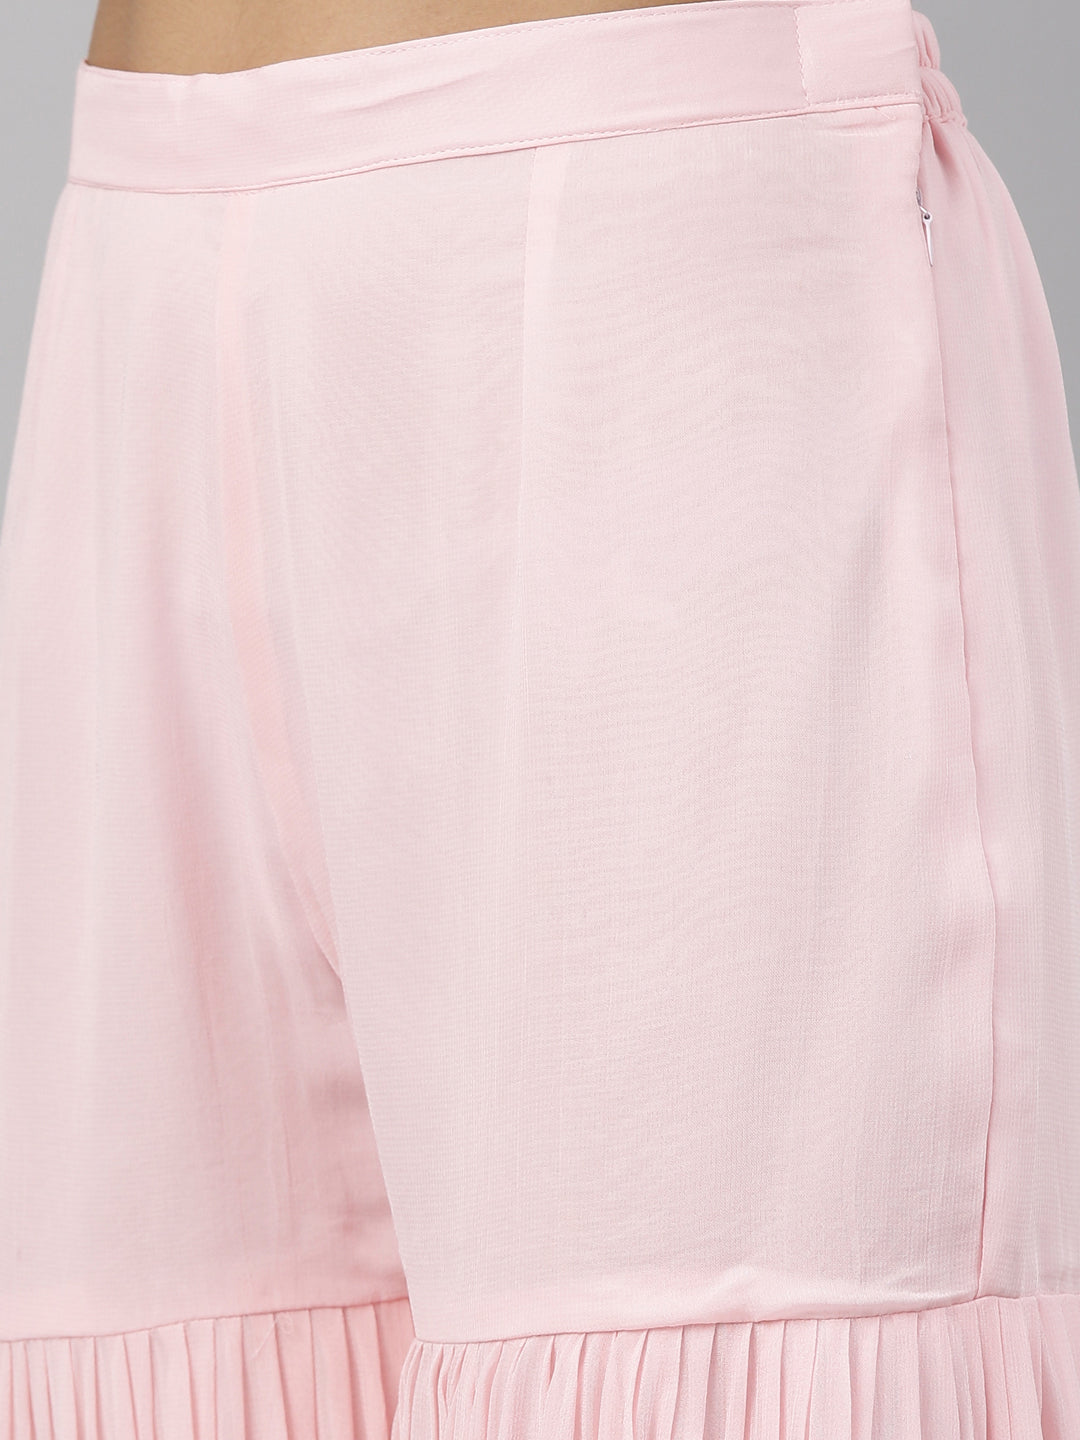 Neeru's Pink Color Georgette Fabric Suit-Short Anarkali